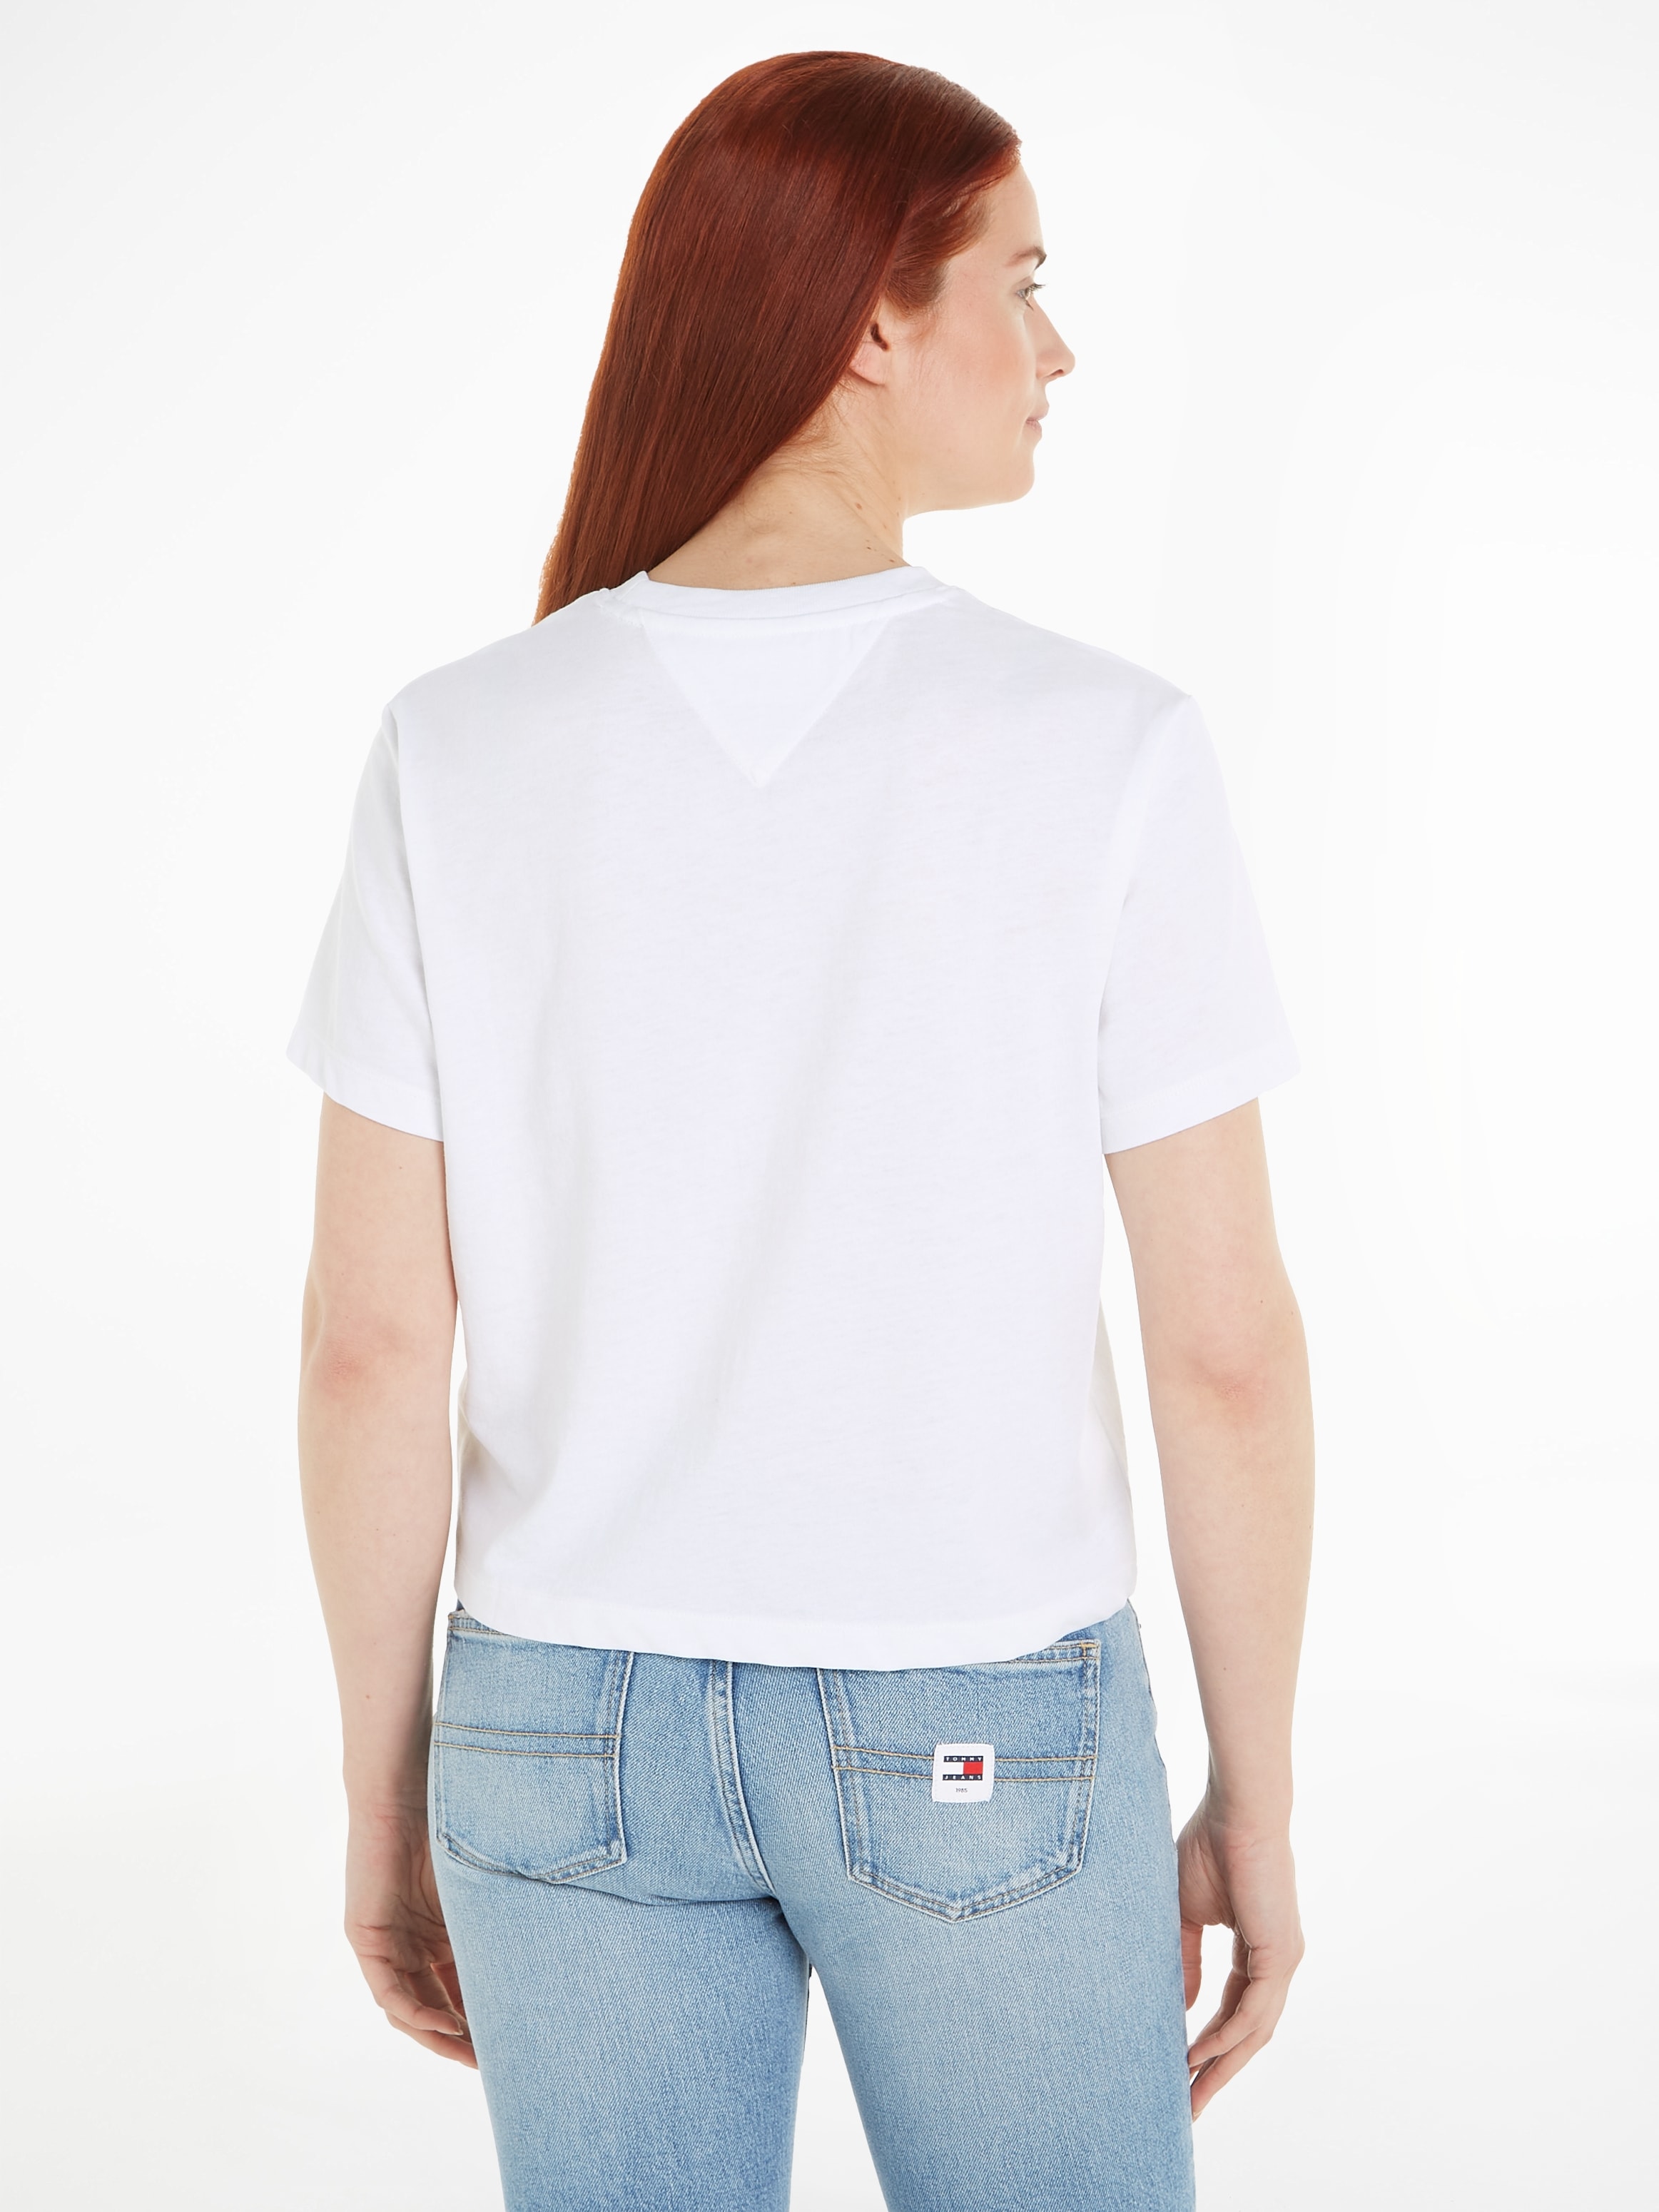 »TJW Jeans BADGE Badge bei EXT«, Schweiz TEE Logo- Jeans Tommy mit grosser Tommy Jelmoli-Versand BXY T-Shirt kaufen online